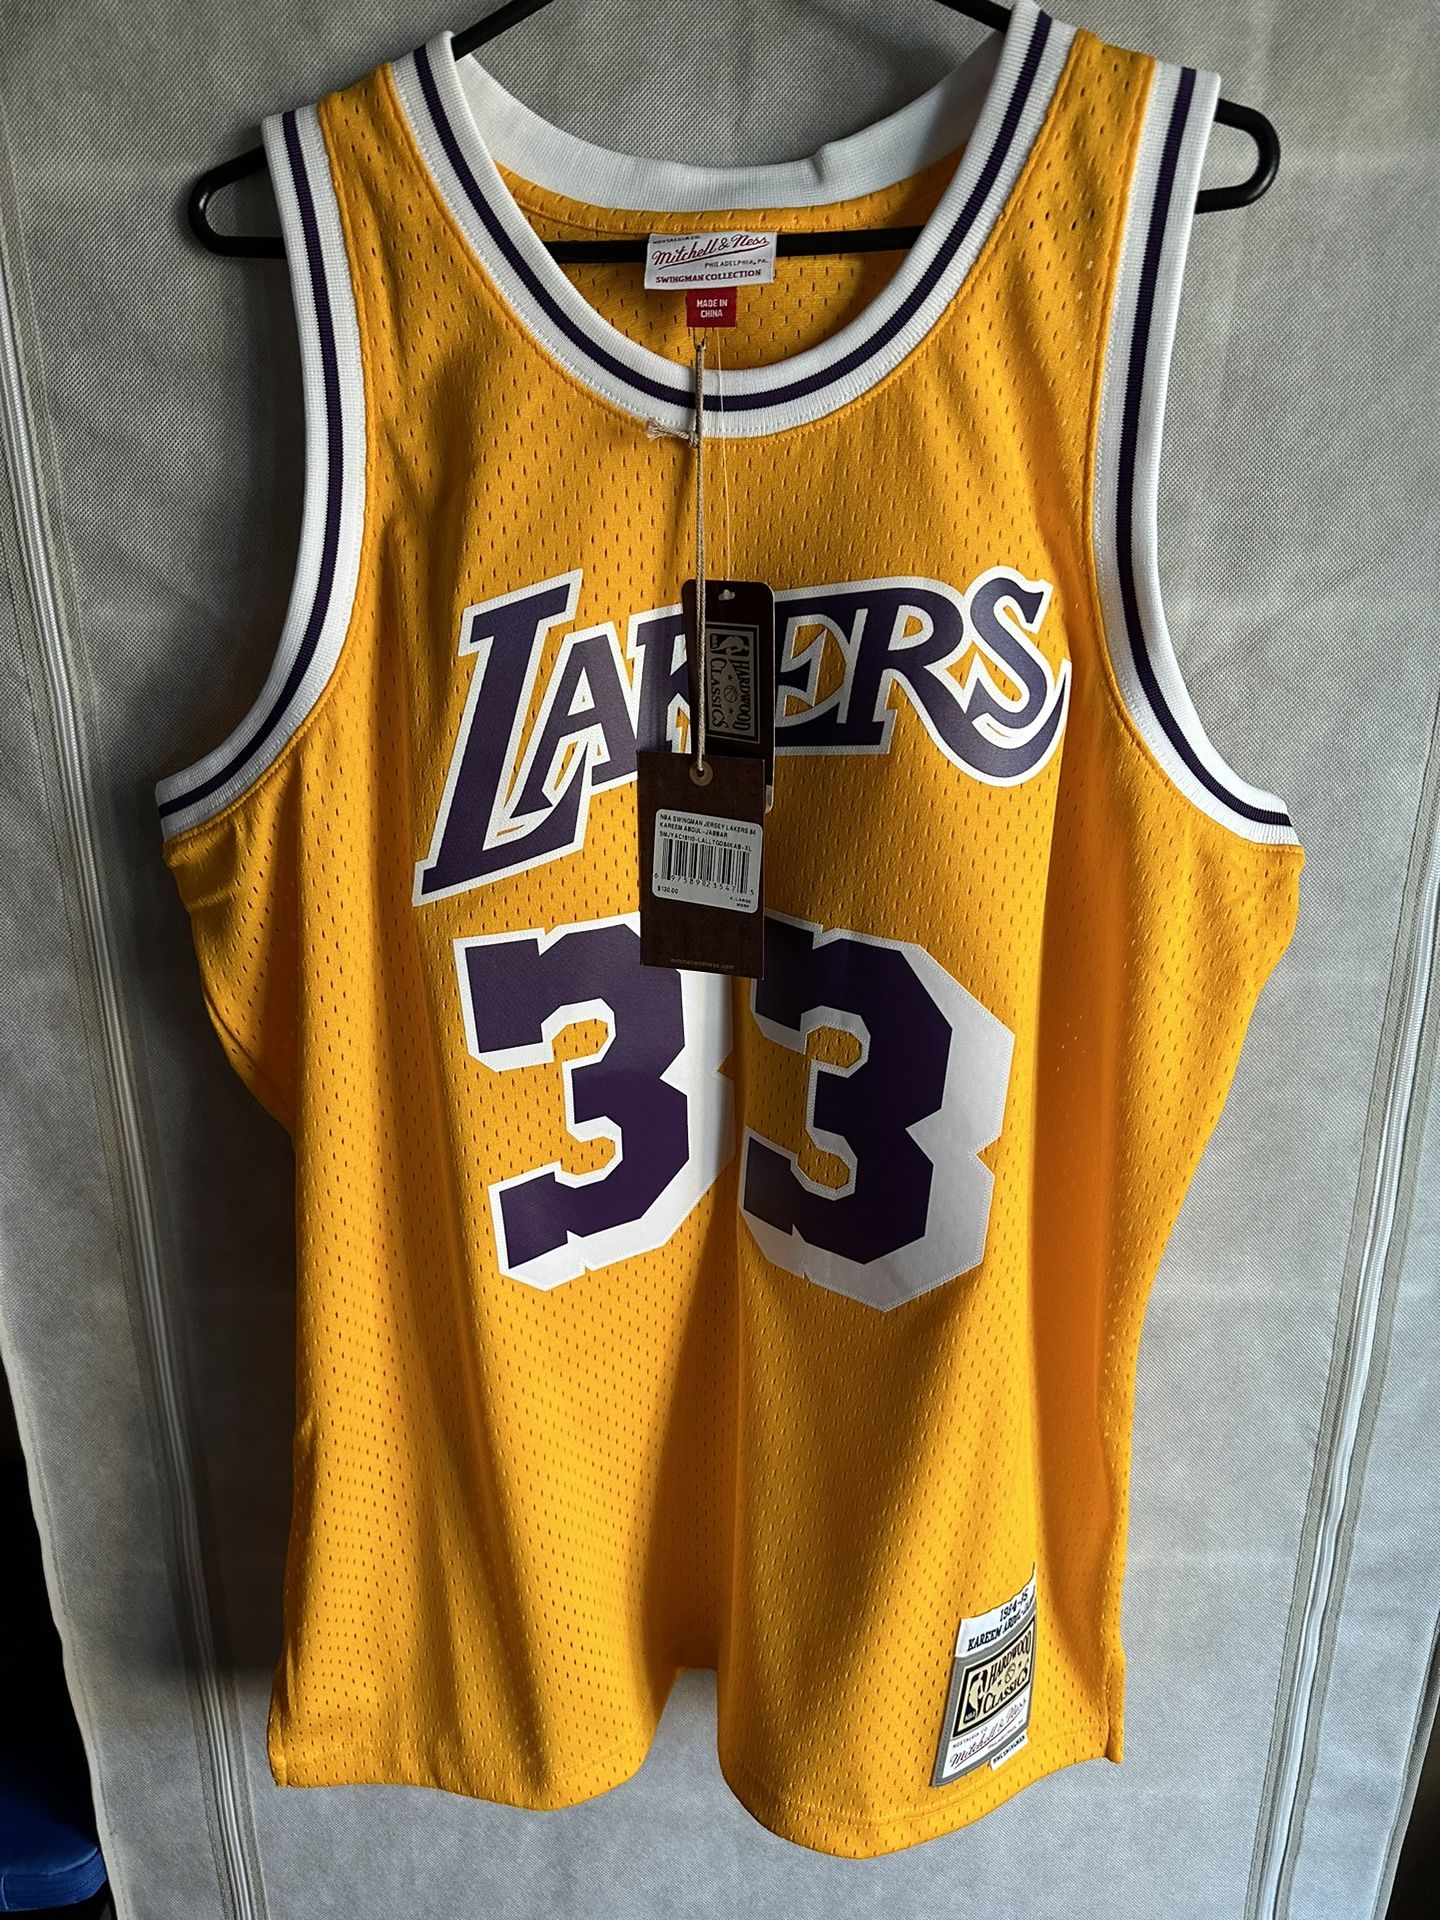 Abdul Jabbar 33 Los Angeles Lakers Basketball Jersey Sz XL